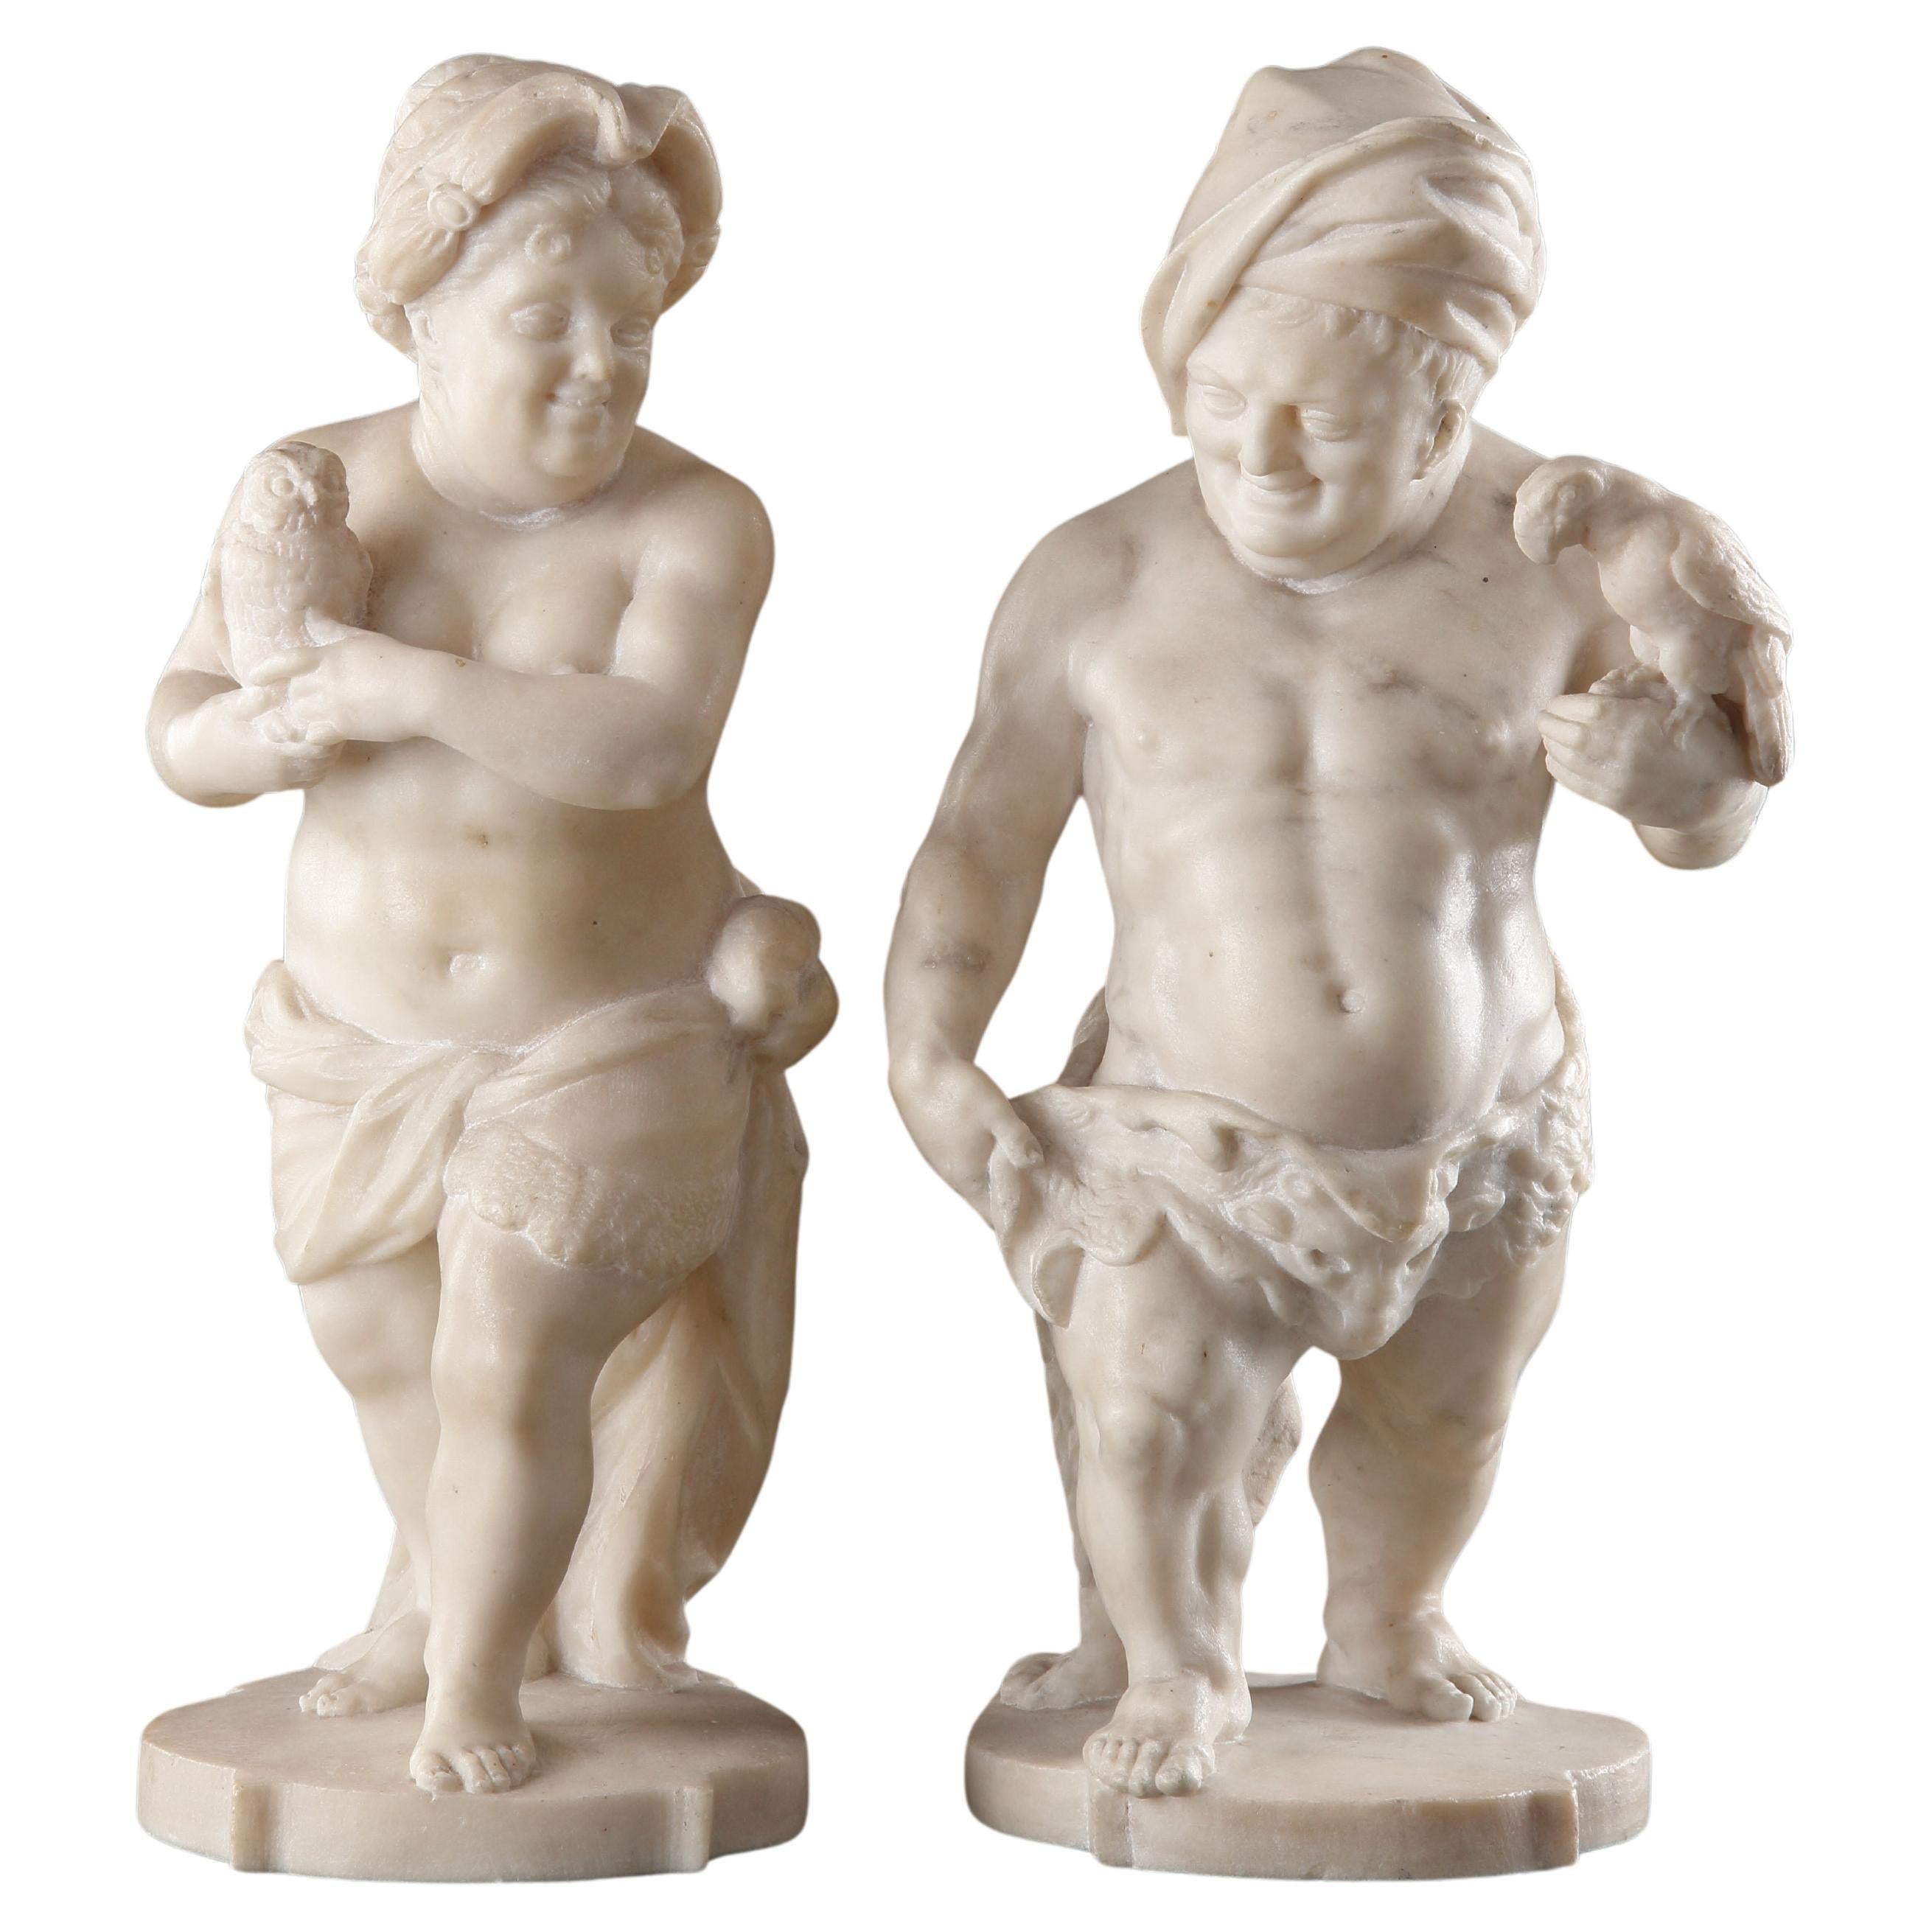 A Superb Pair of Neapolitan Carved Figures of Dwarves